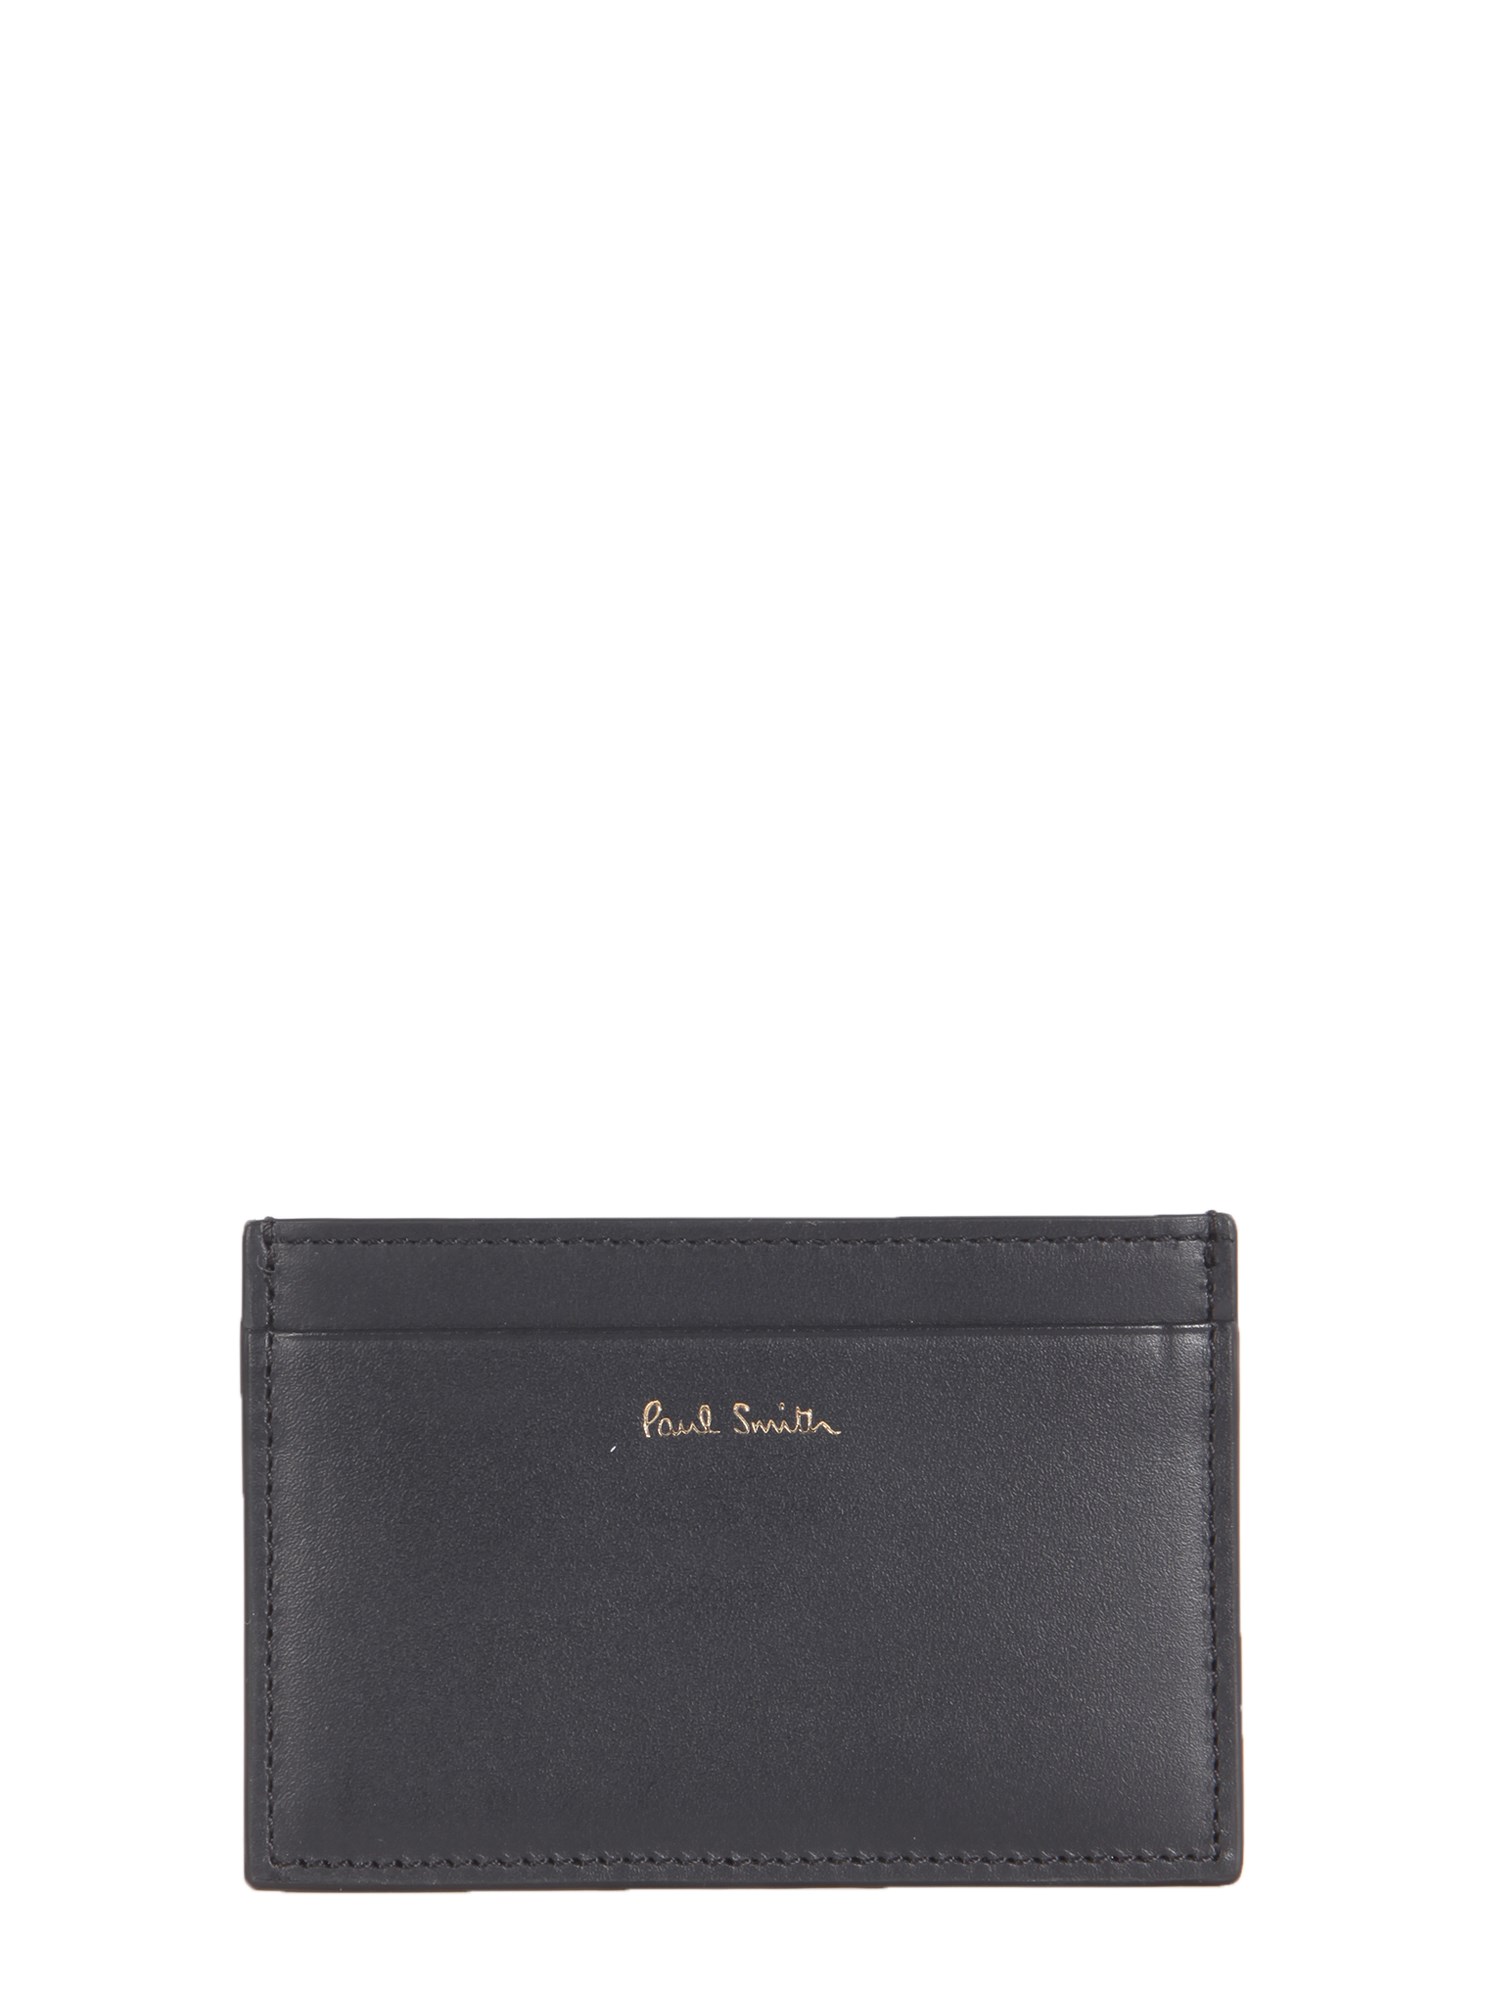 paul smith leather card holder